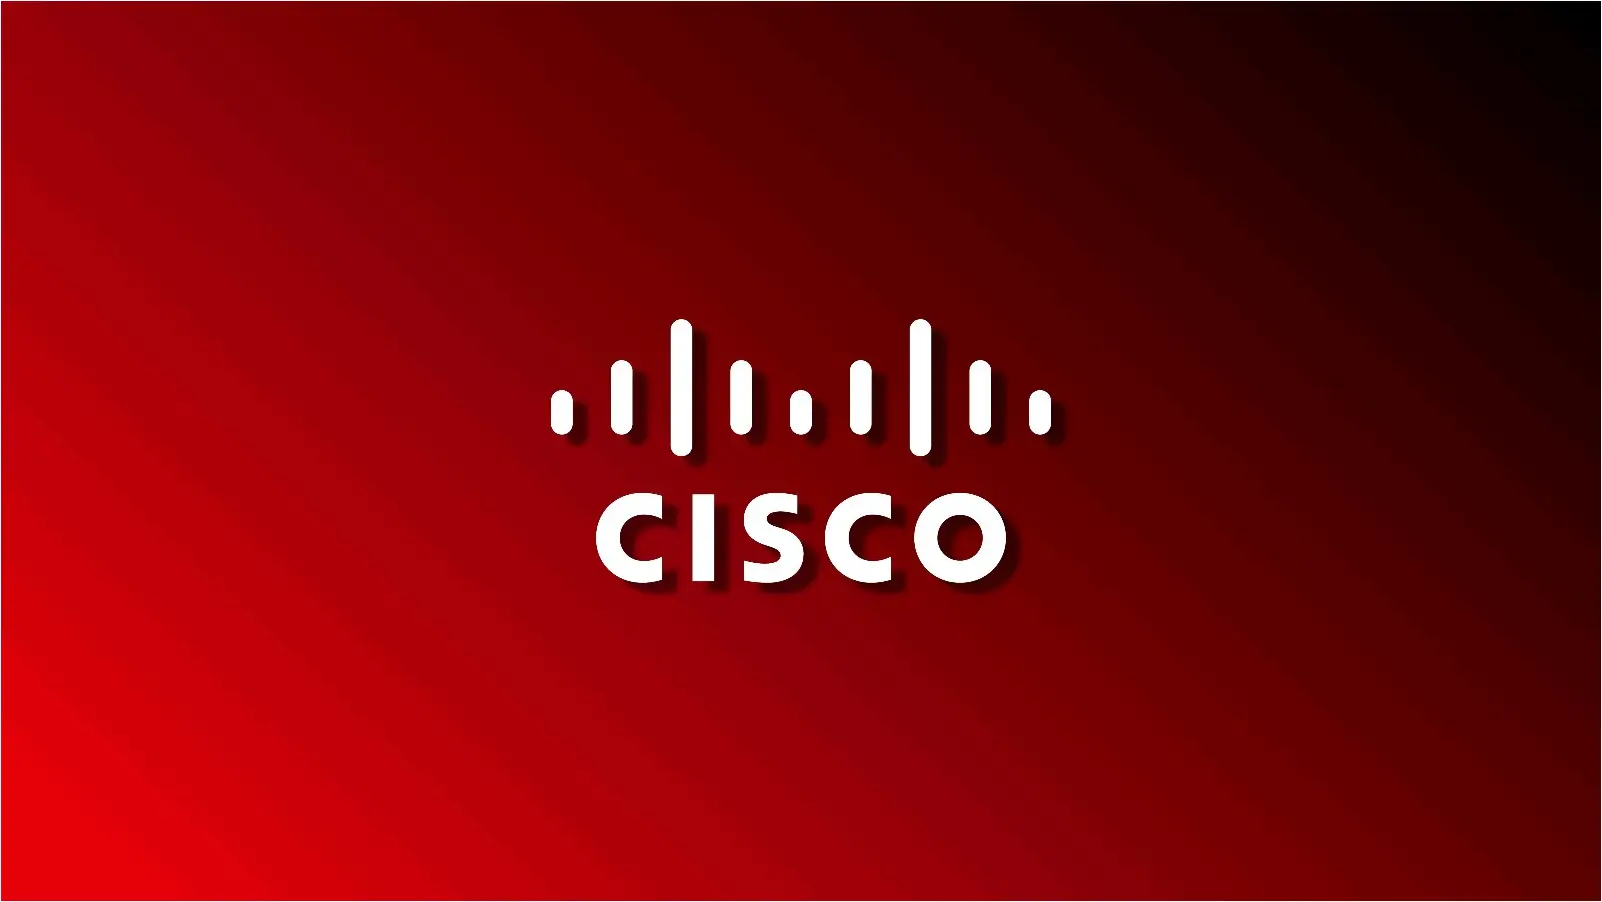 Cisco warns of password-spraying attacks targeting VPN services